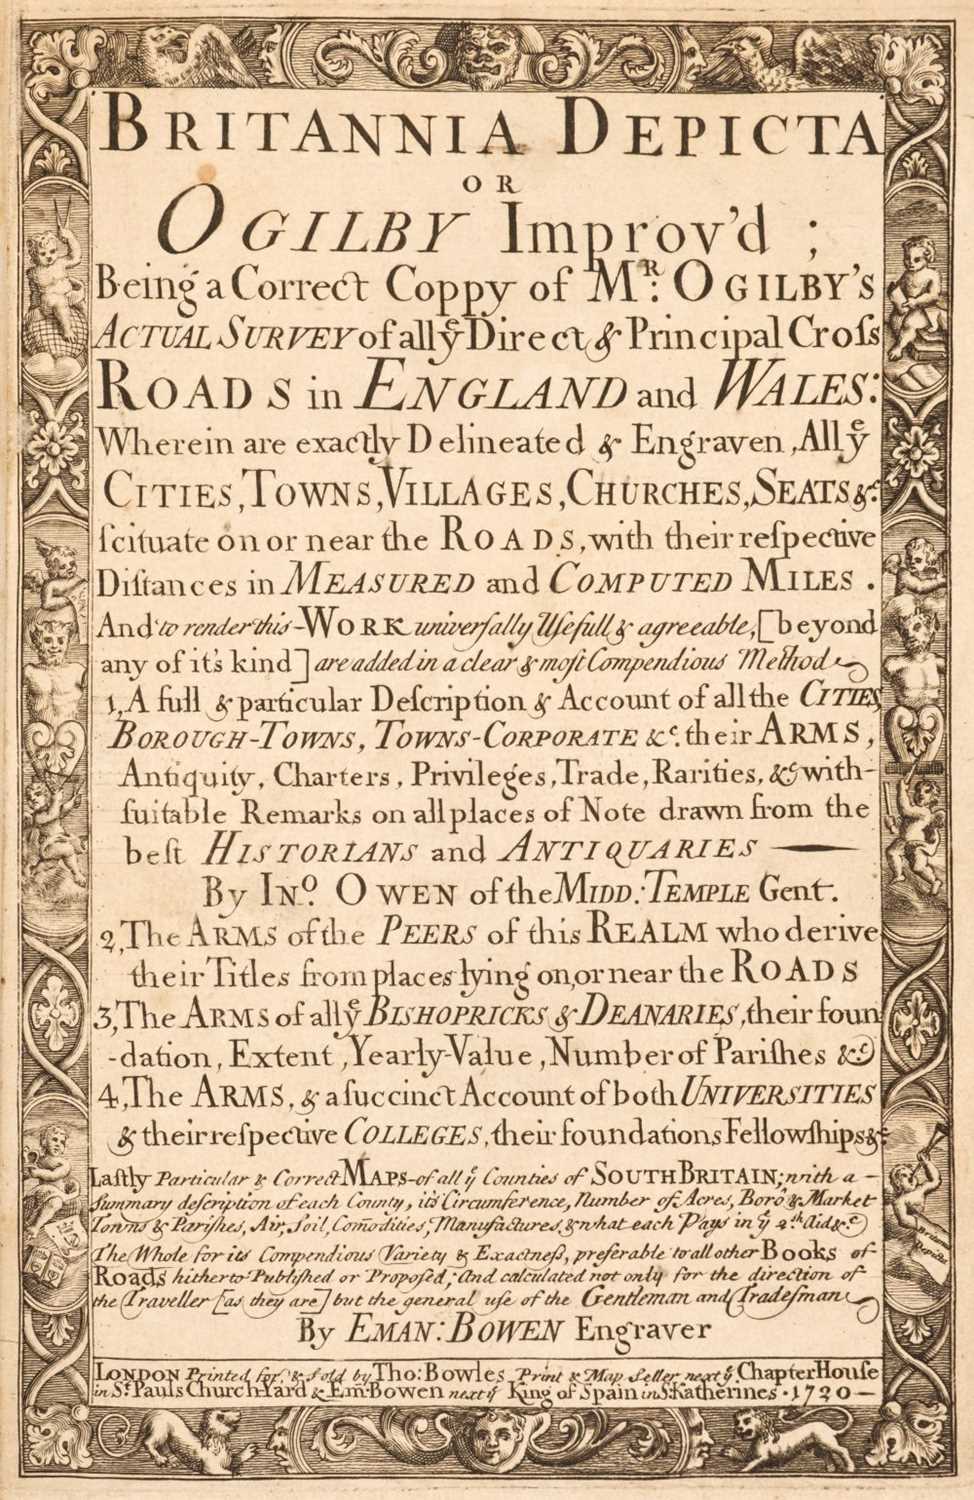 Lot 37 - Owen (John & Bowen Emanuel). Britannia Depicta or Ogilby Improv'd, 1st edition, 1720